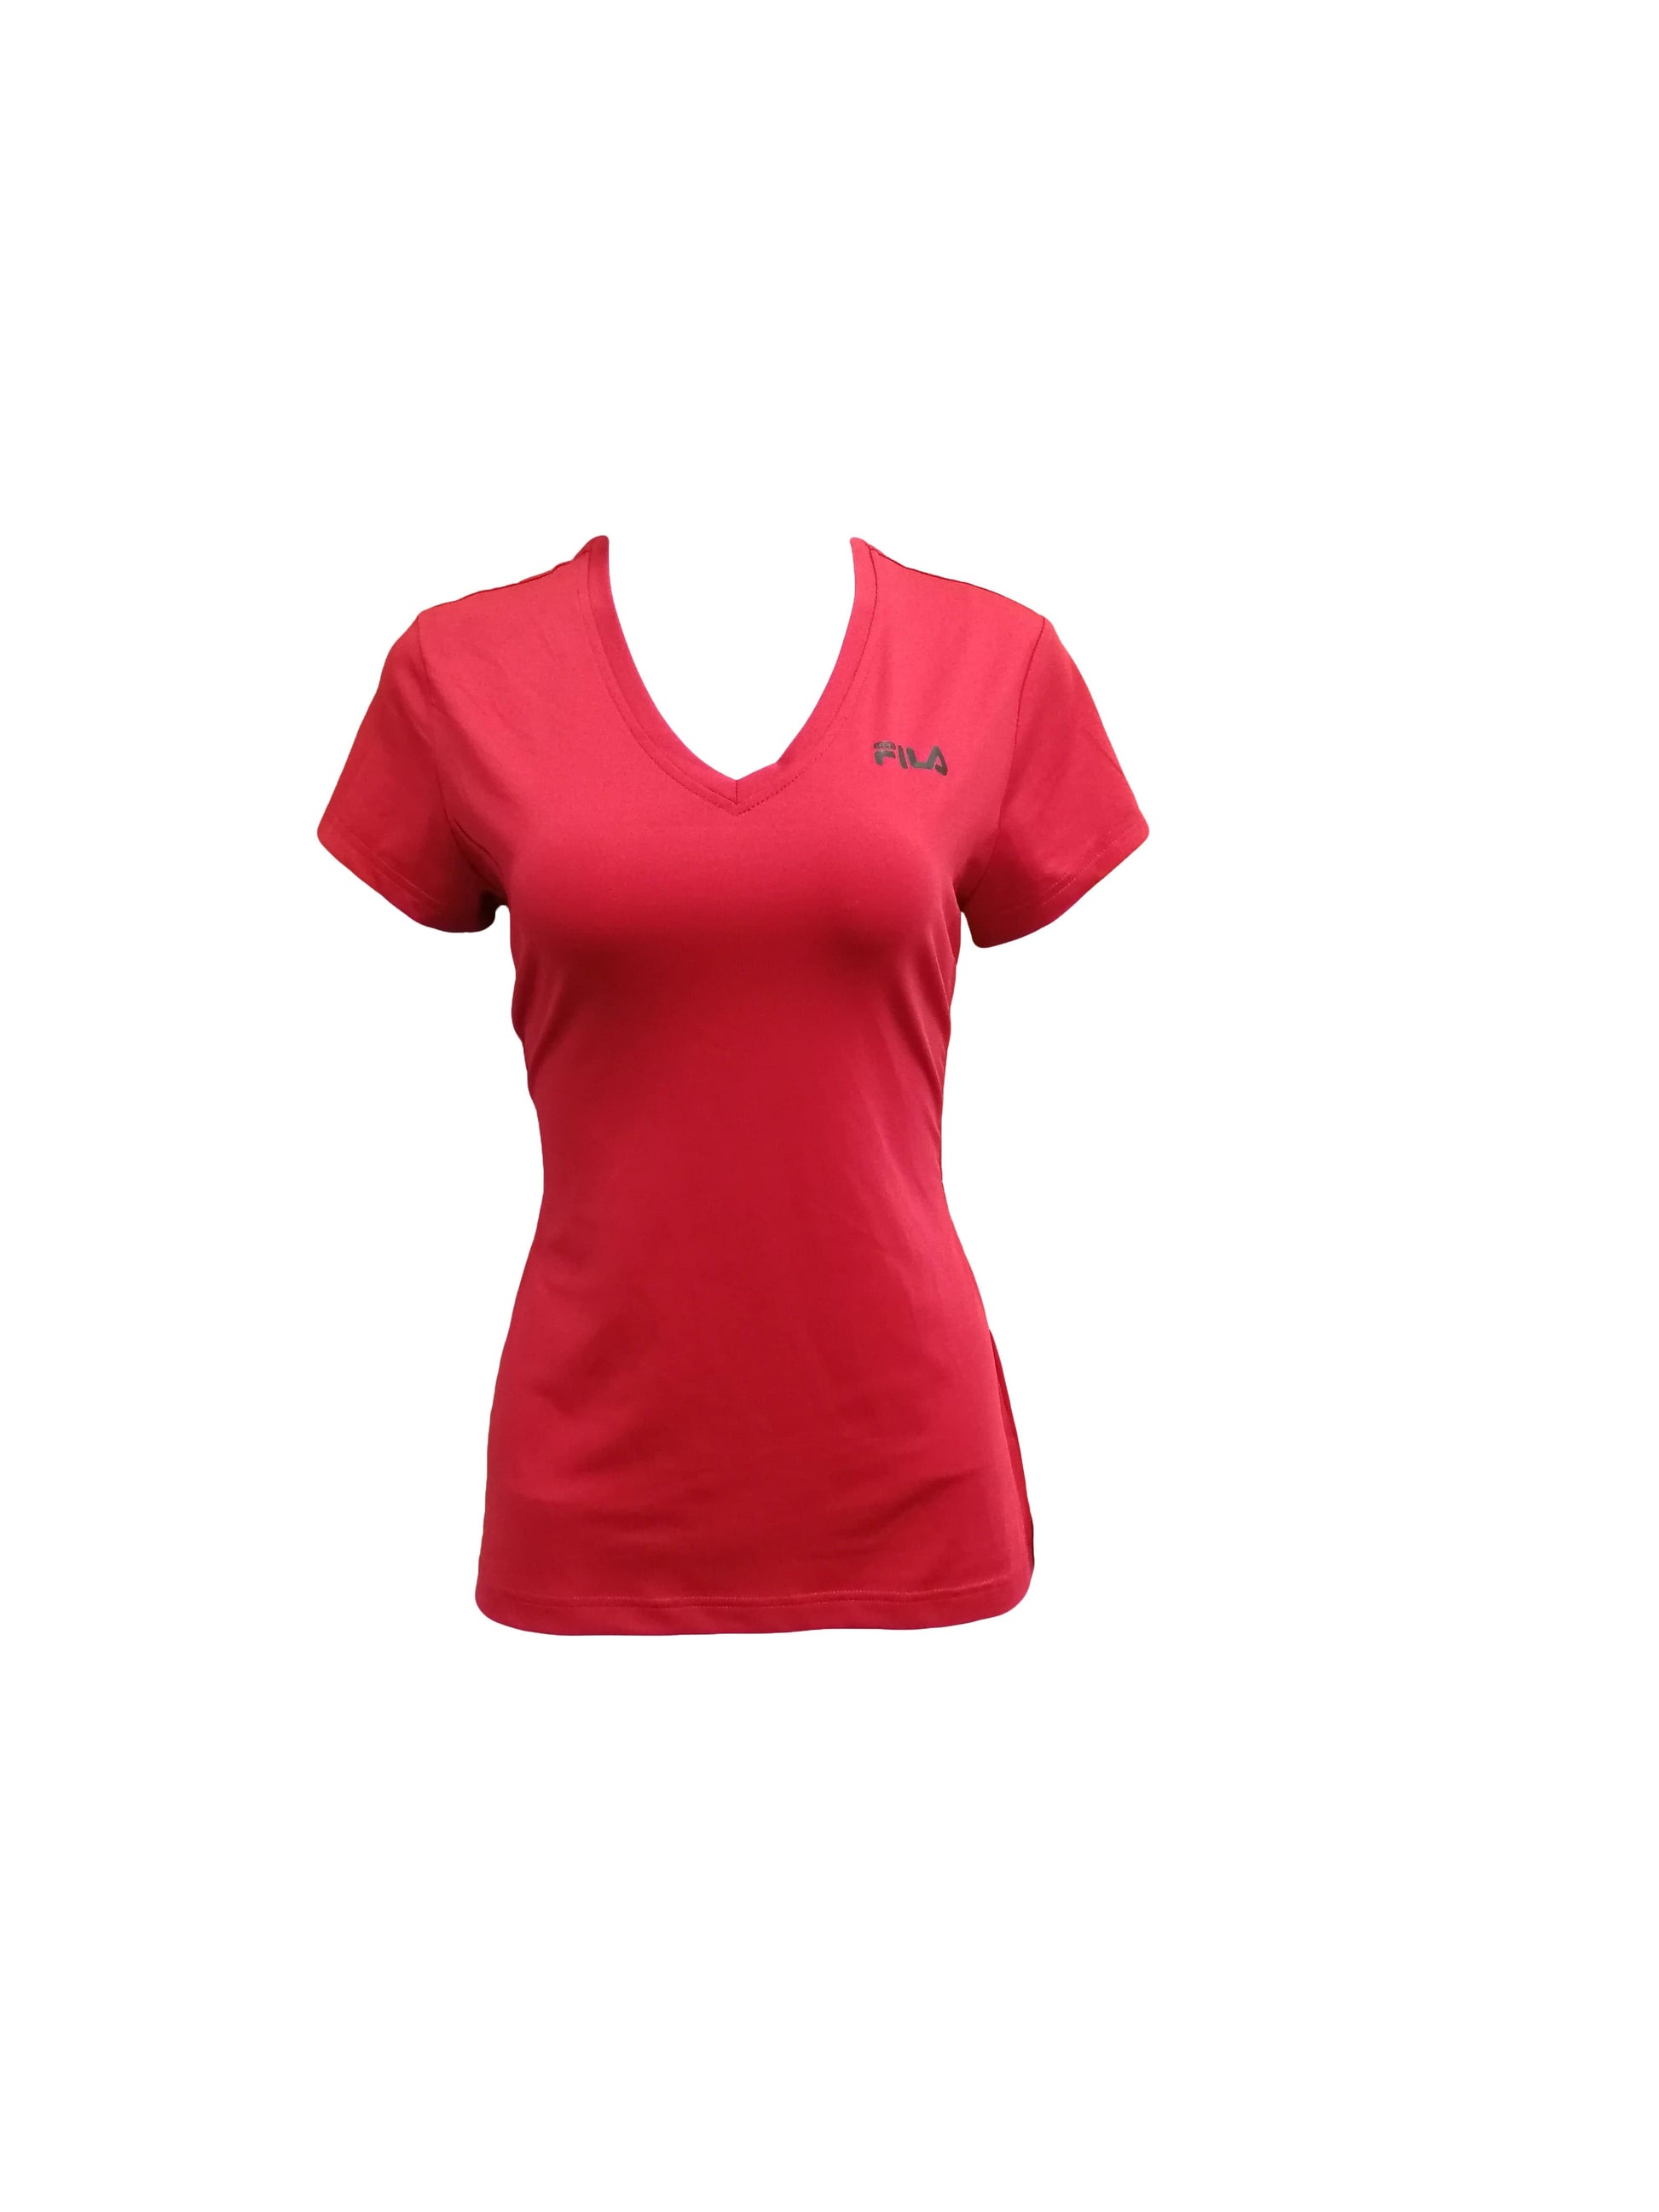 Fila Womens sports Medium / Red Short Sleeve Top